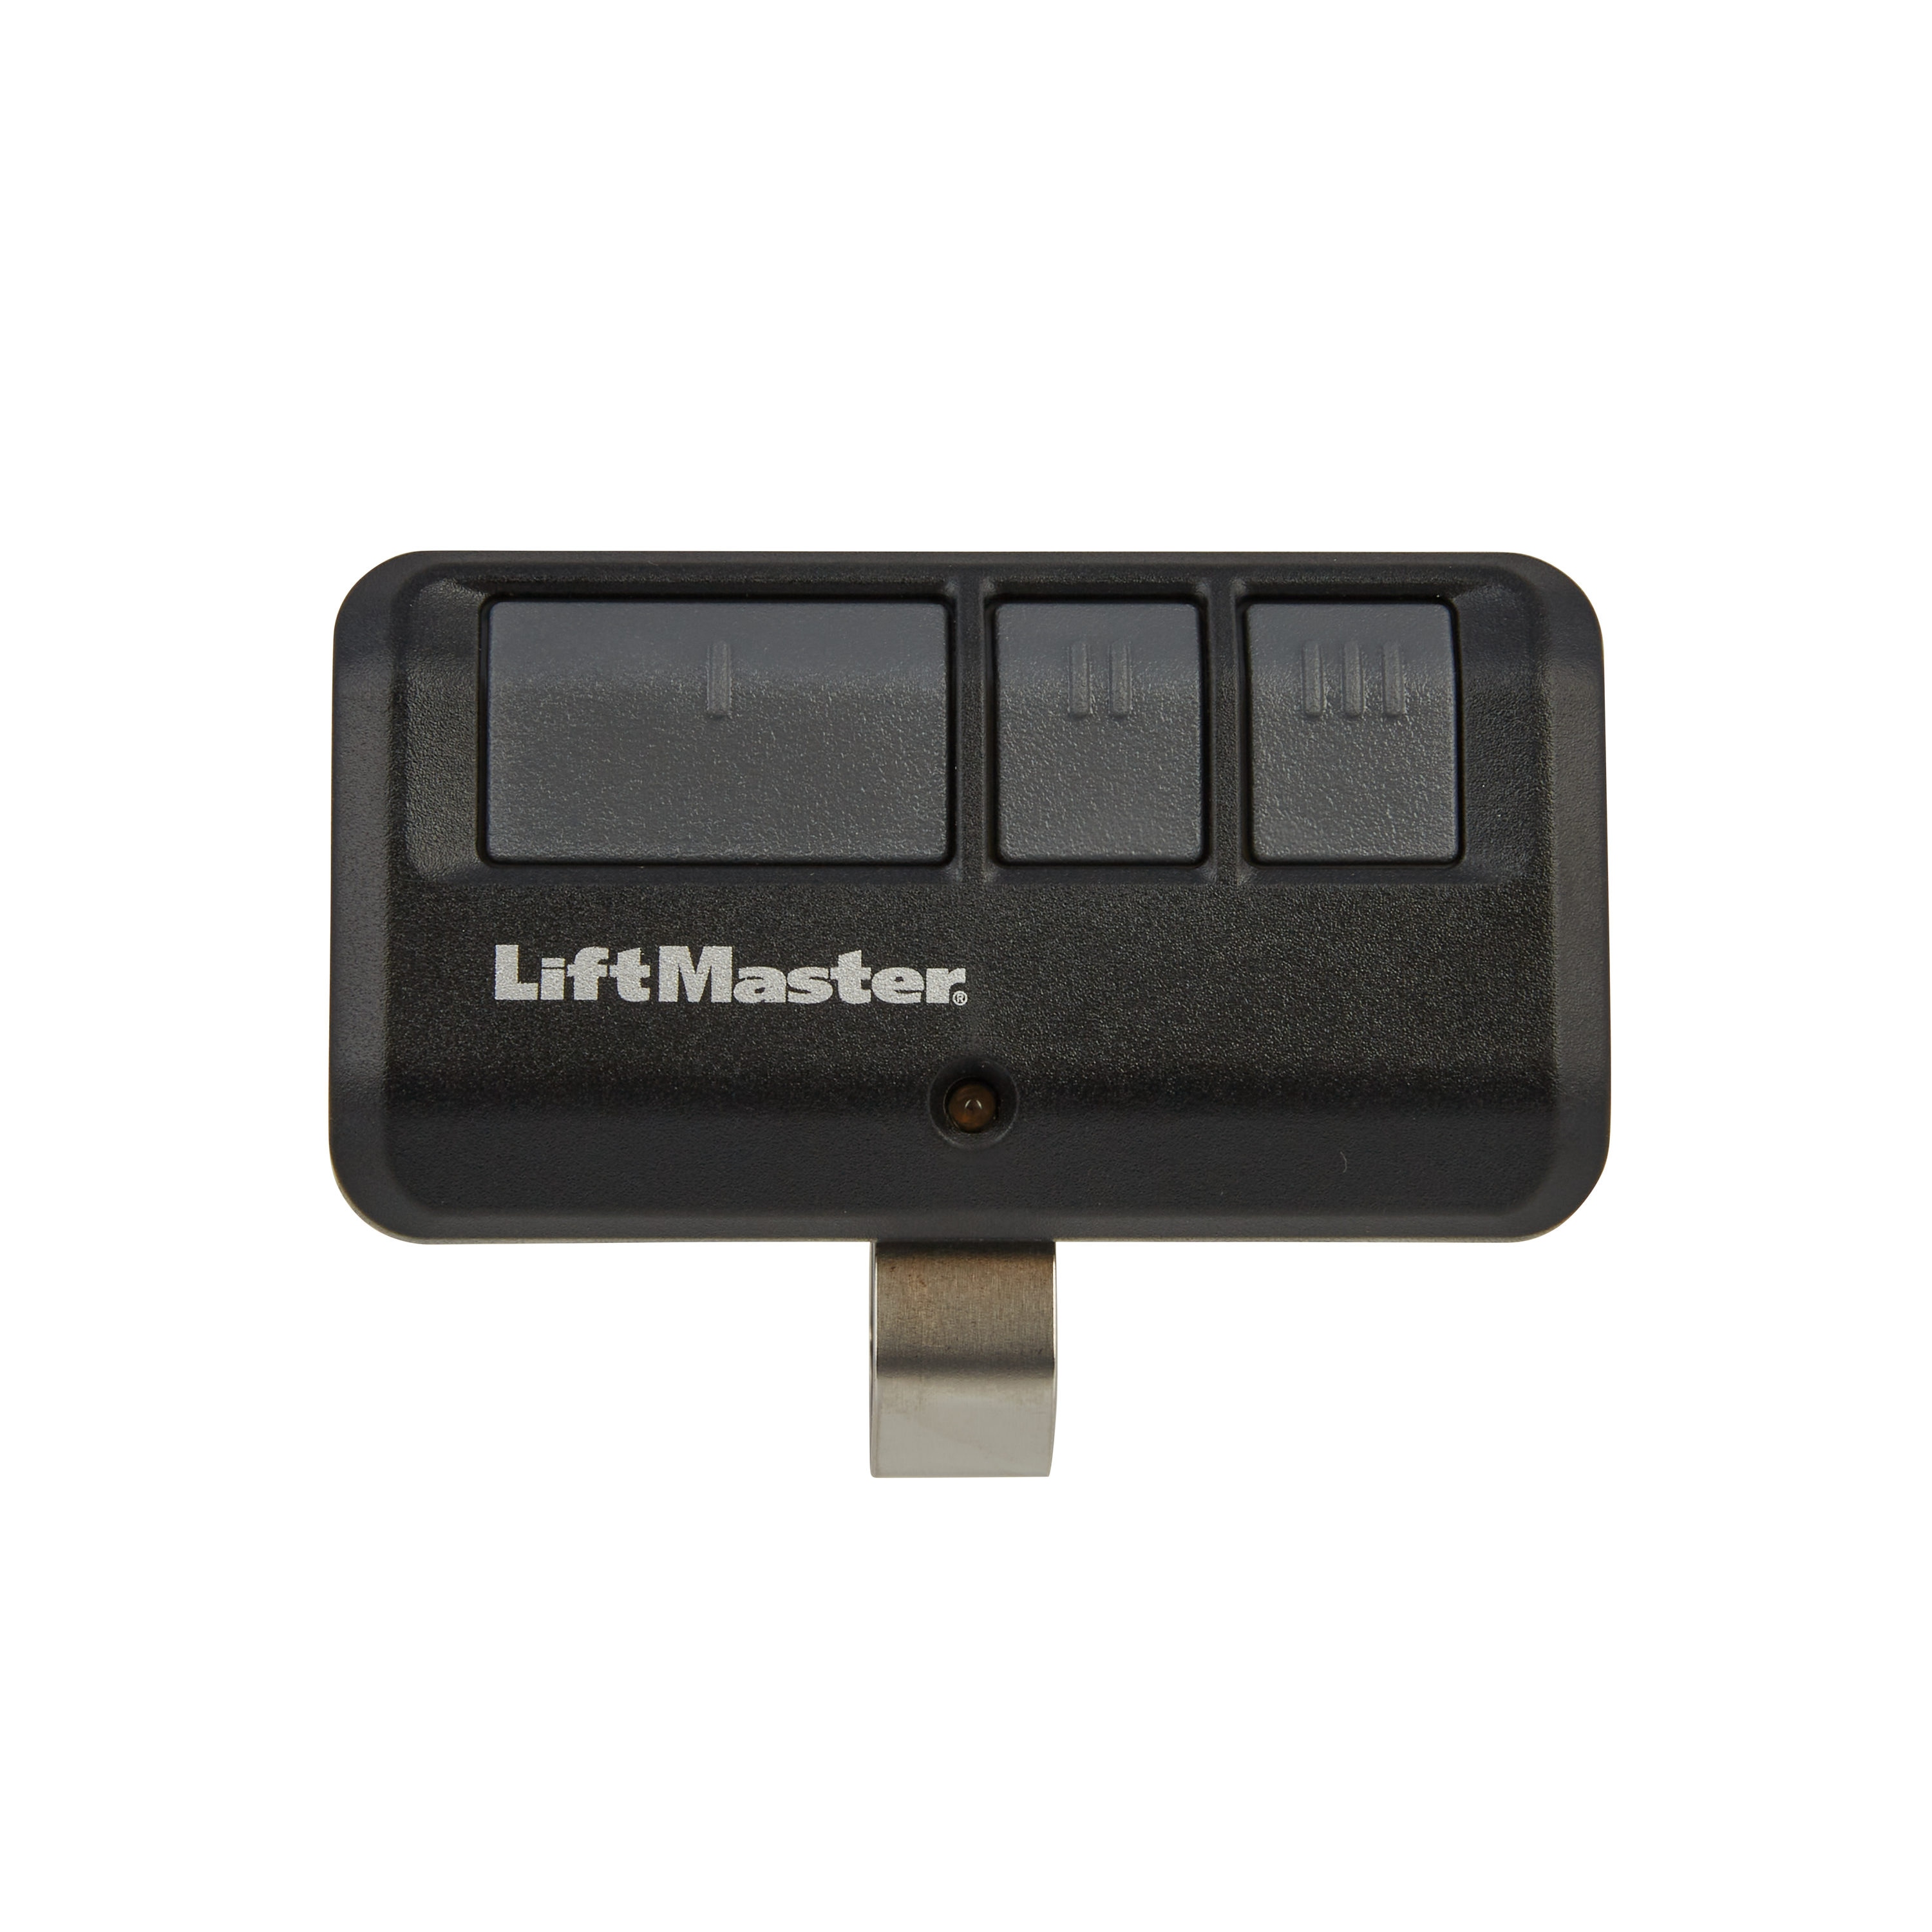 BRAND NEW Liftmaster Wireless 3 Button Remote Control Garage Door Opener 893LM